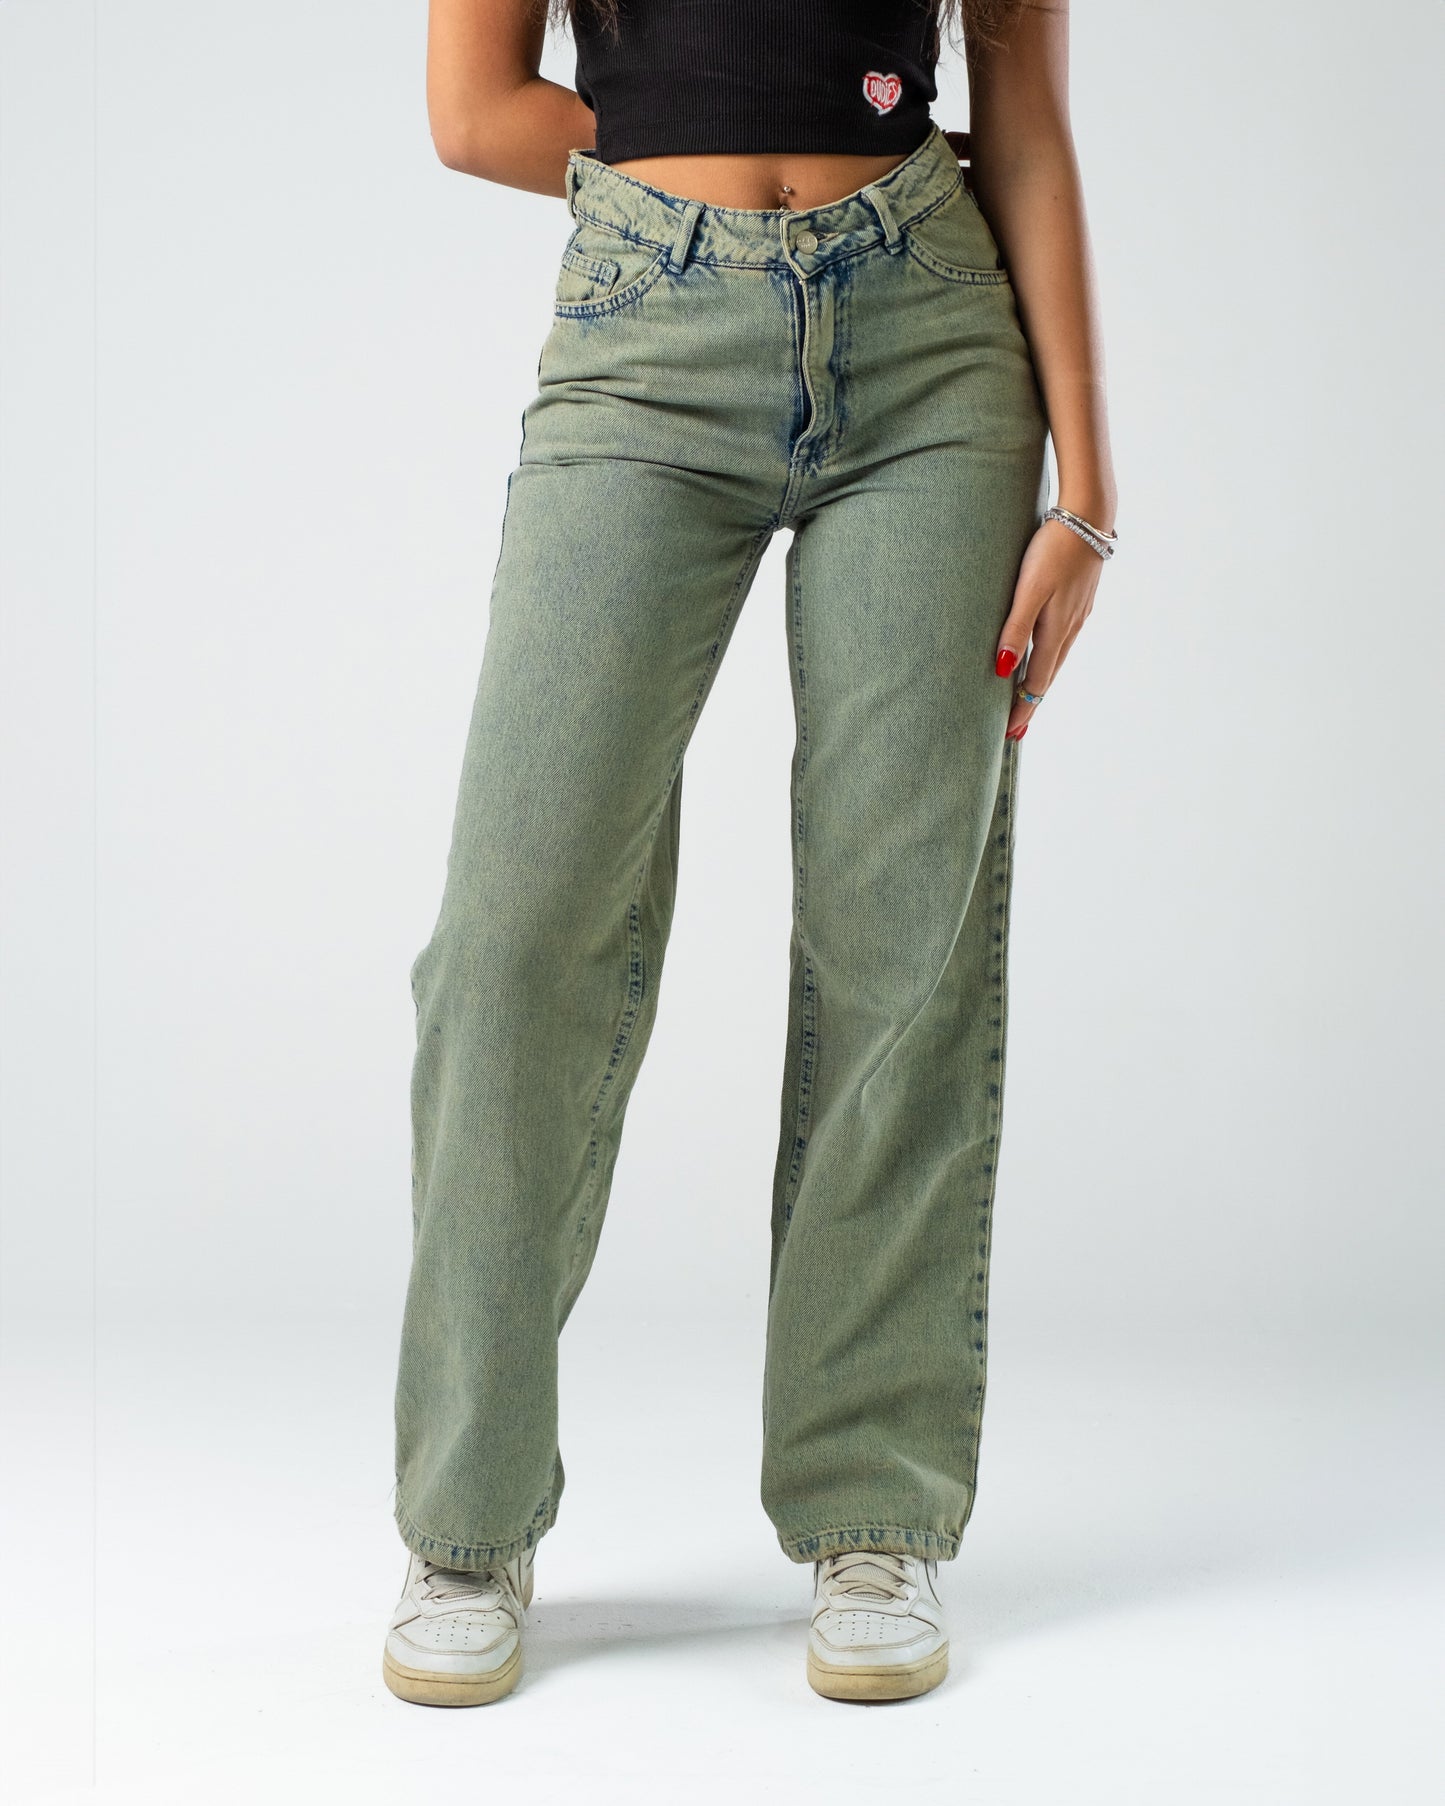 90's Fit Women's Jeans (Green)